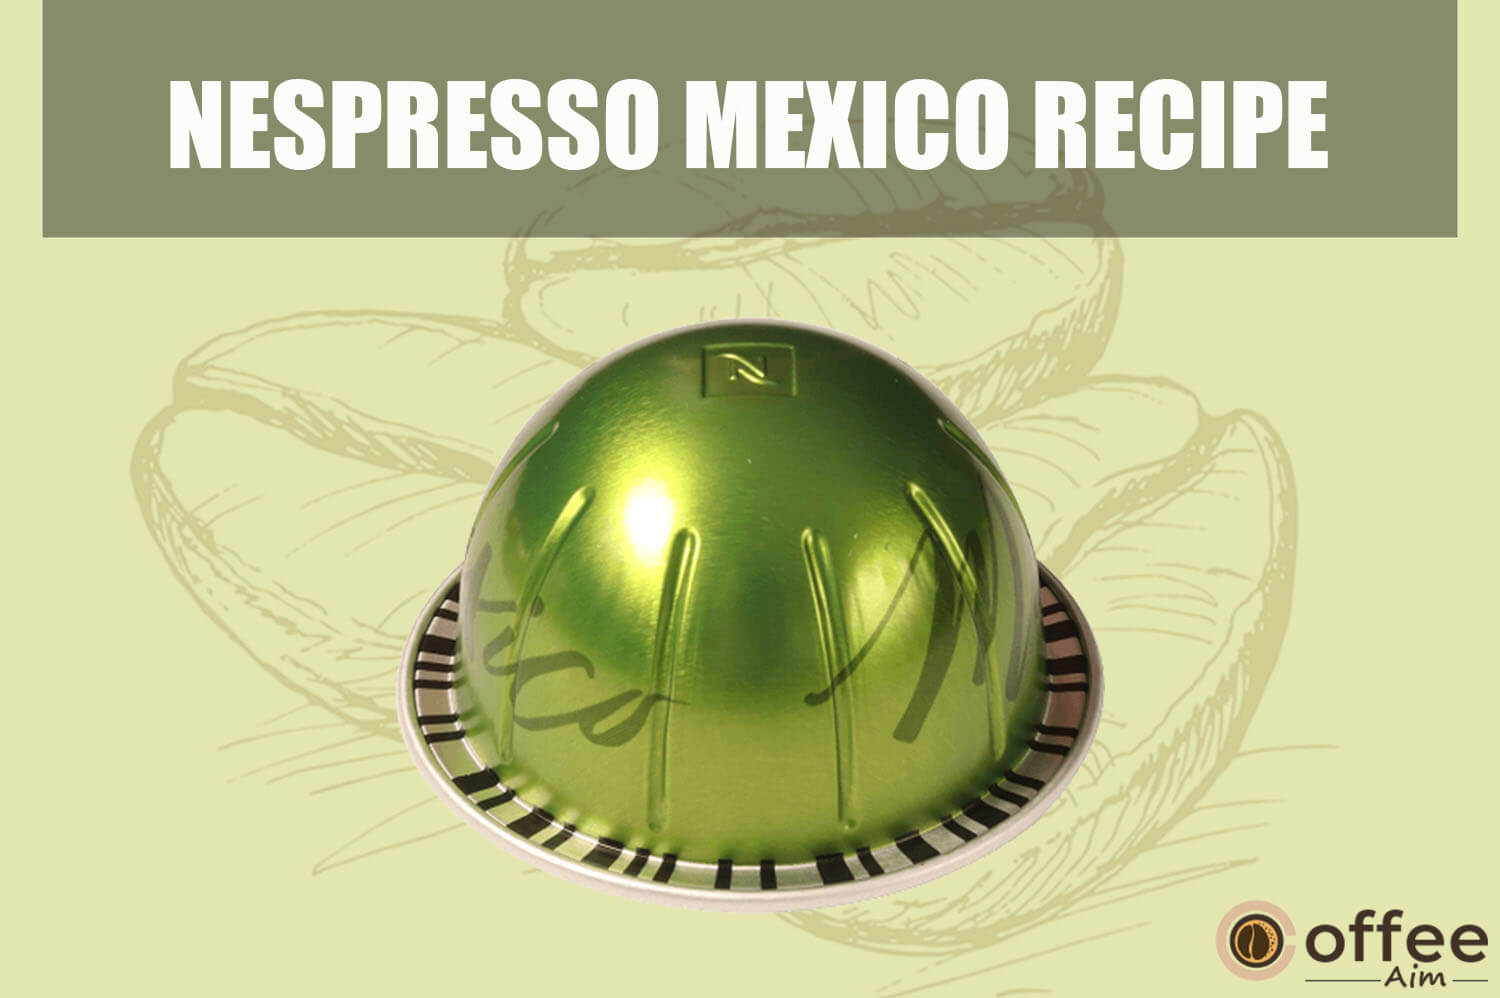 Featured image for the article "Nespresso Mexico Recipe"